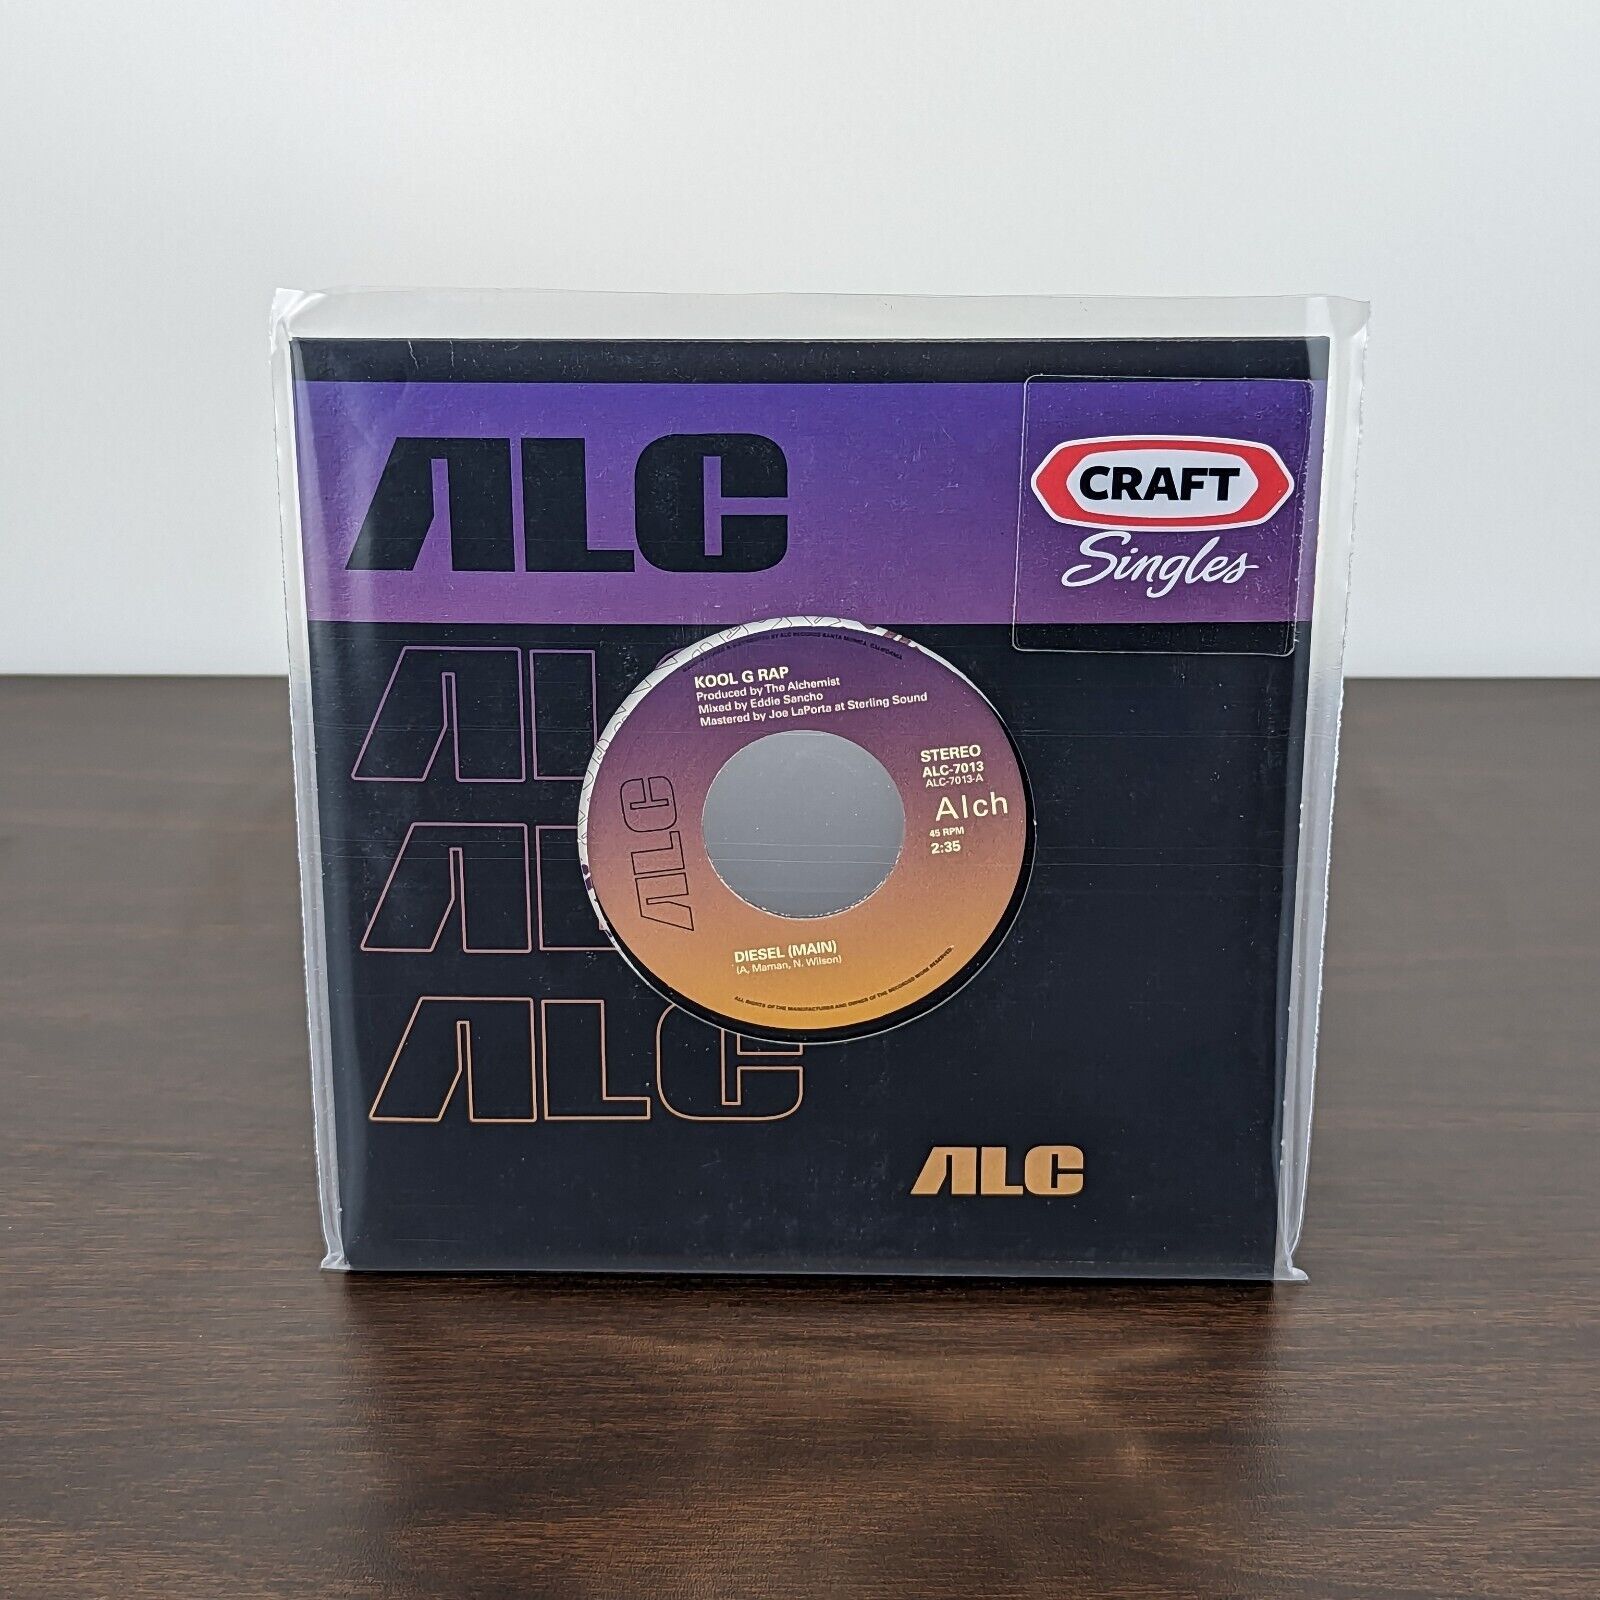 Kool G Rap & The Alchemist - DIESEL 7" Black Vinyl Limited Numbered Edition 500